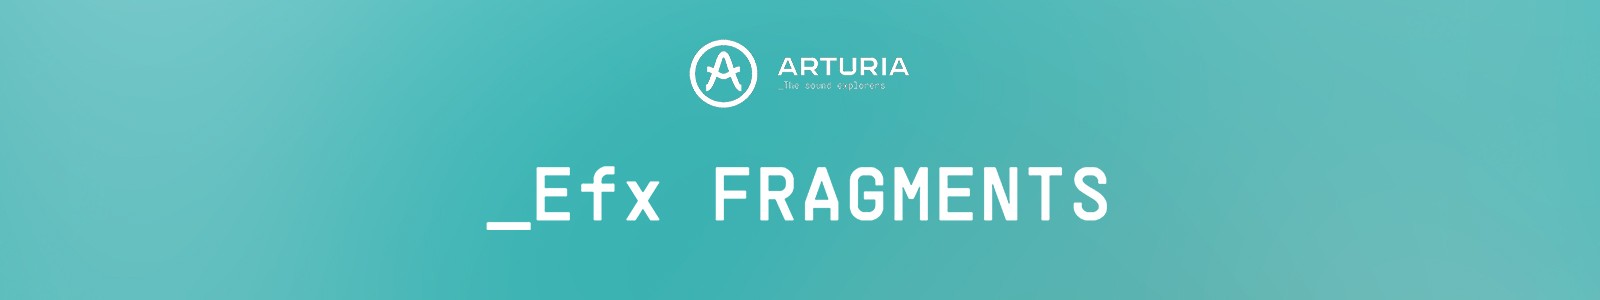 Arturia Efx Fragments